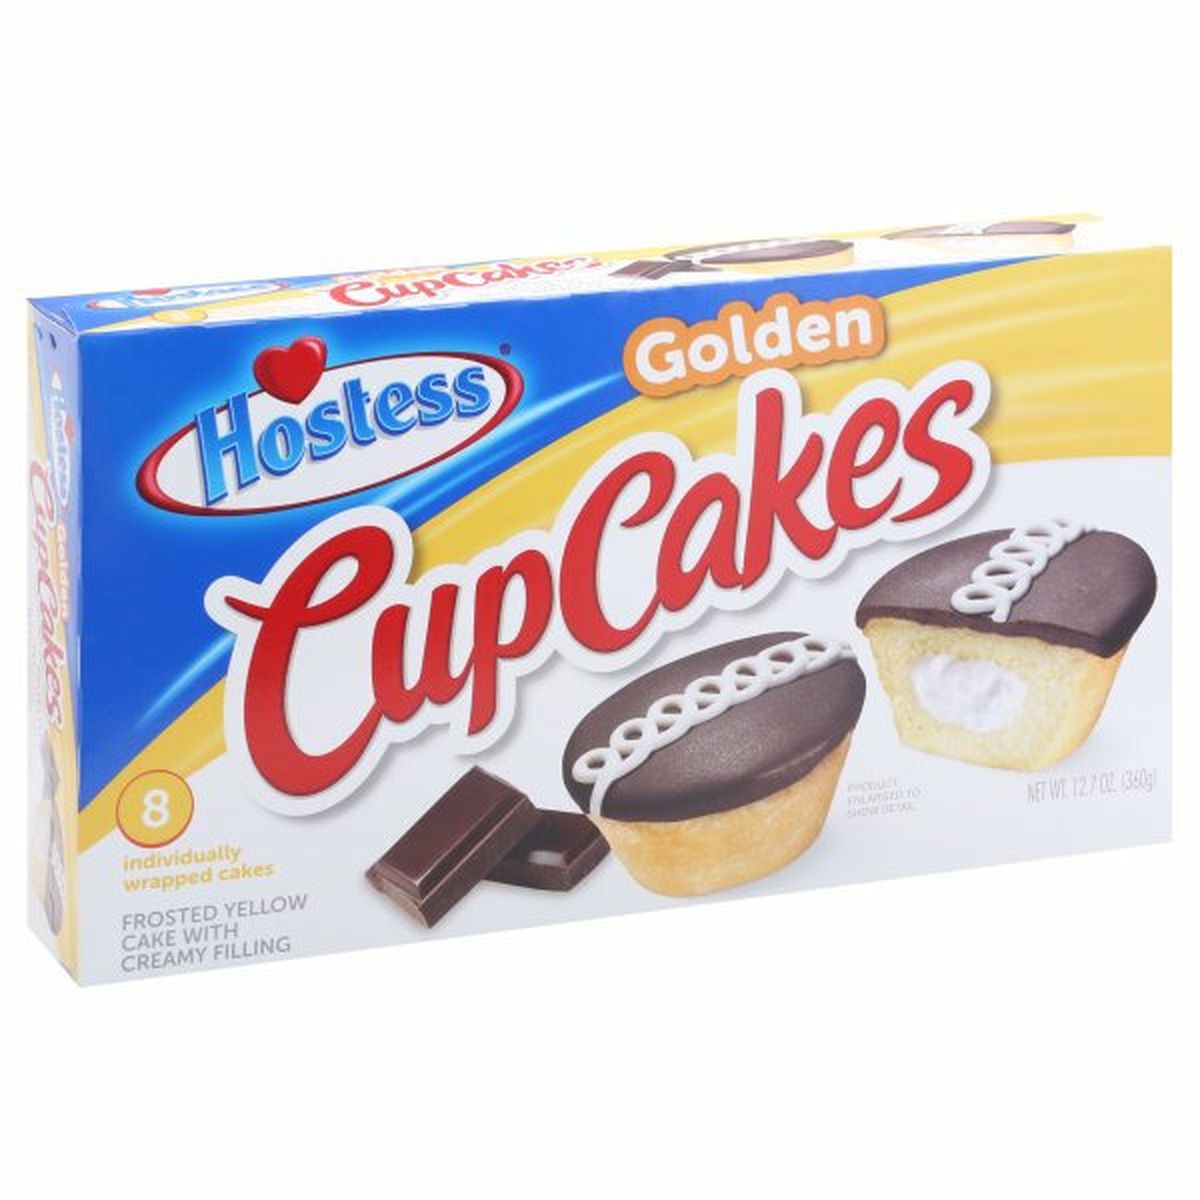 Calories in Hostess Cupcakes, Golden